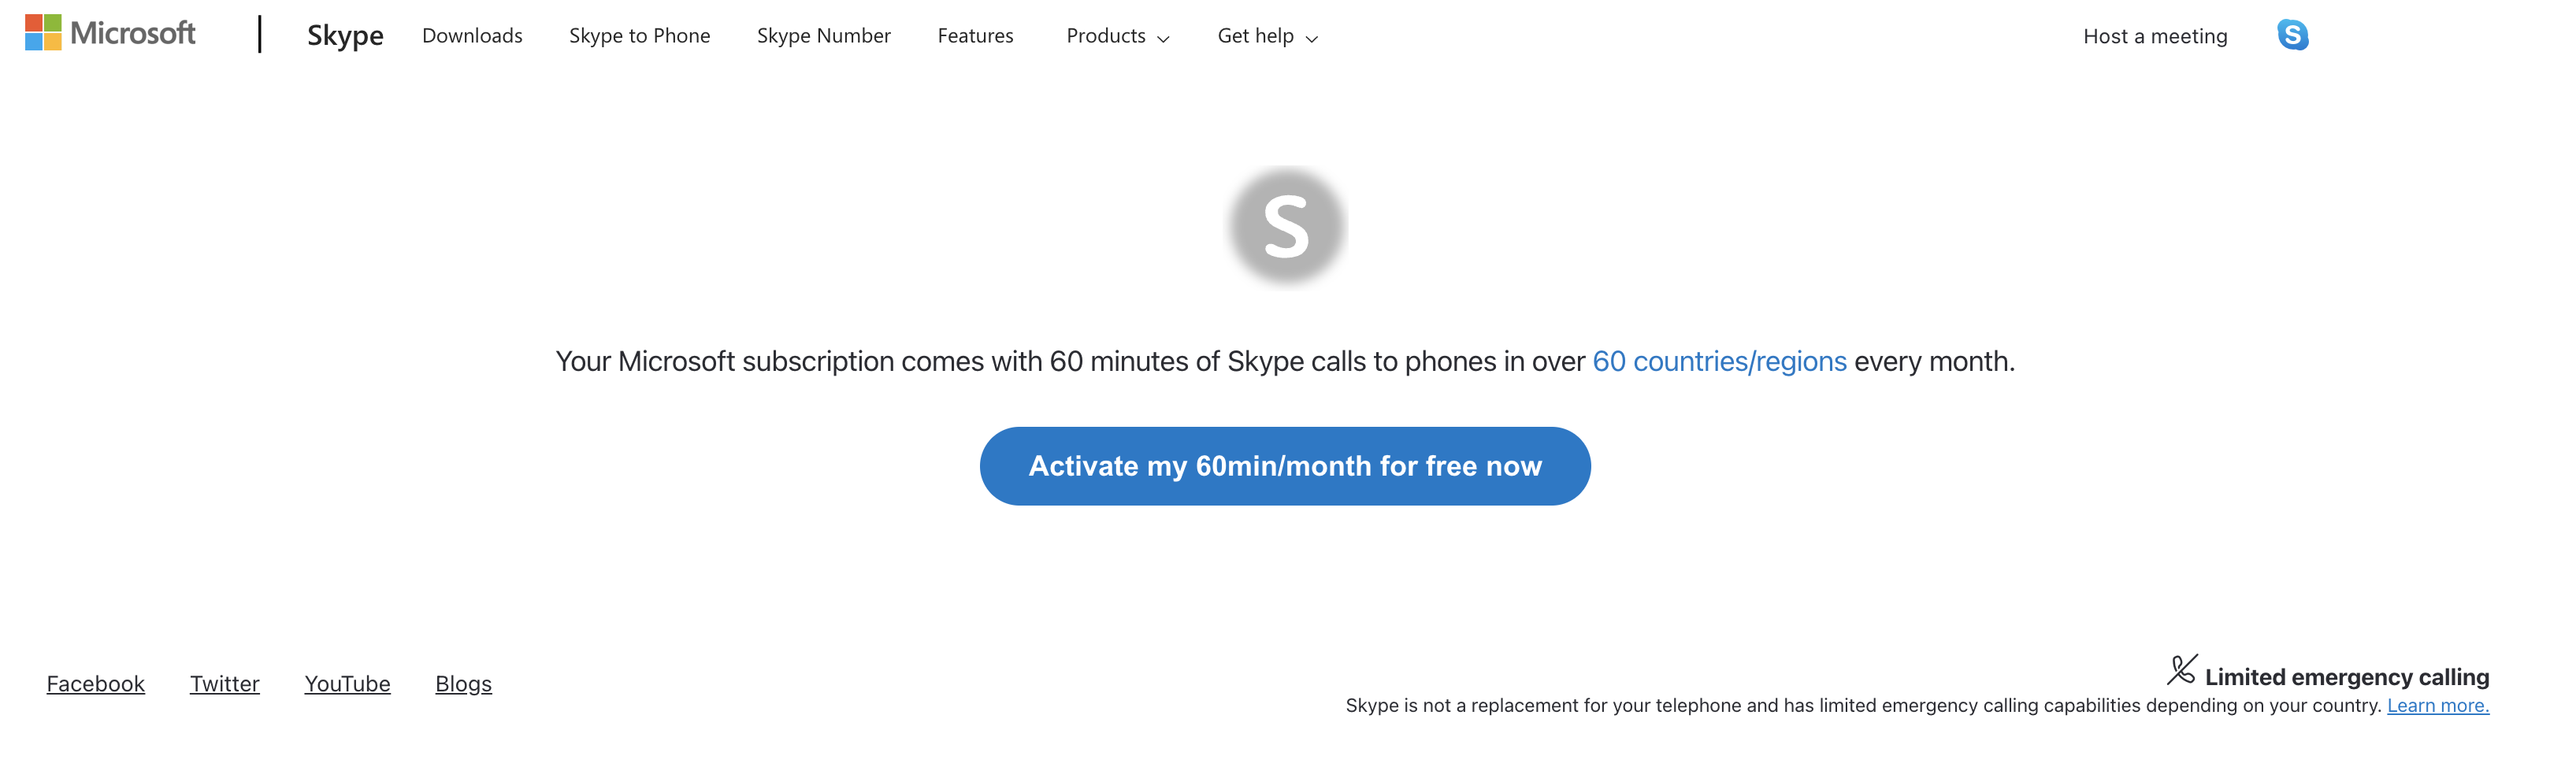 Página web para activar gratis 60 minutos con Skype